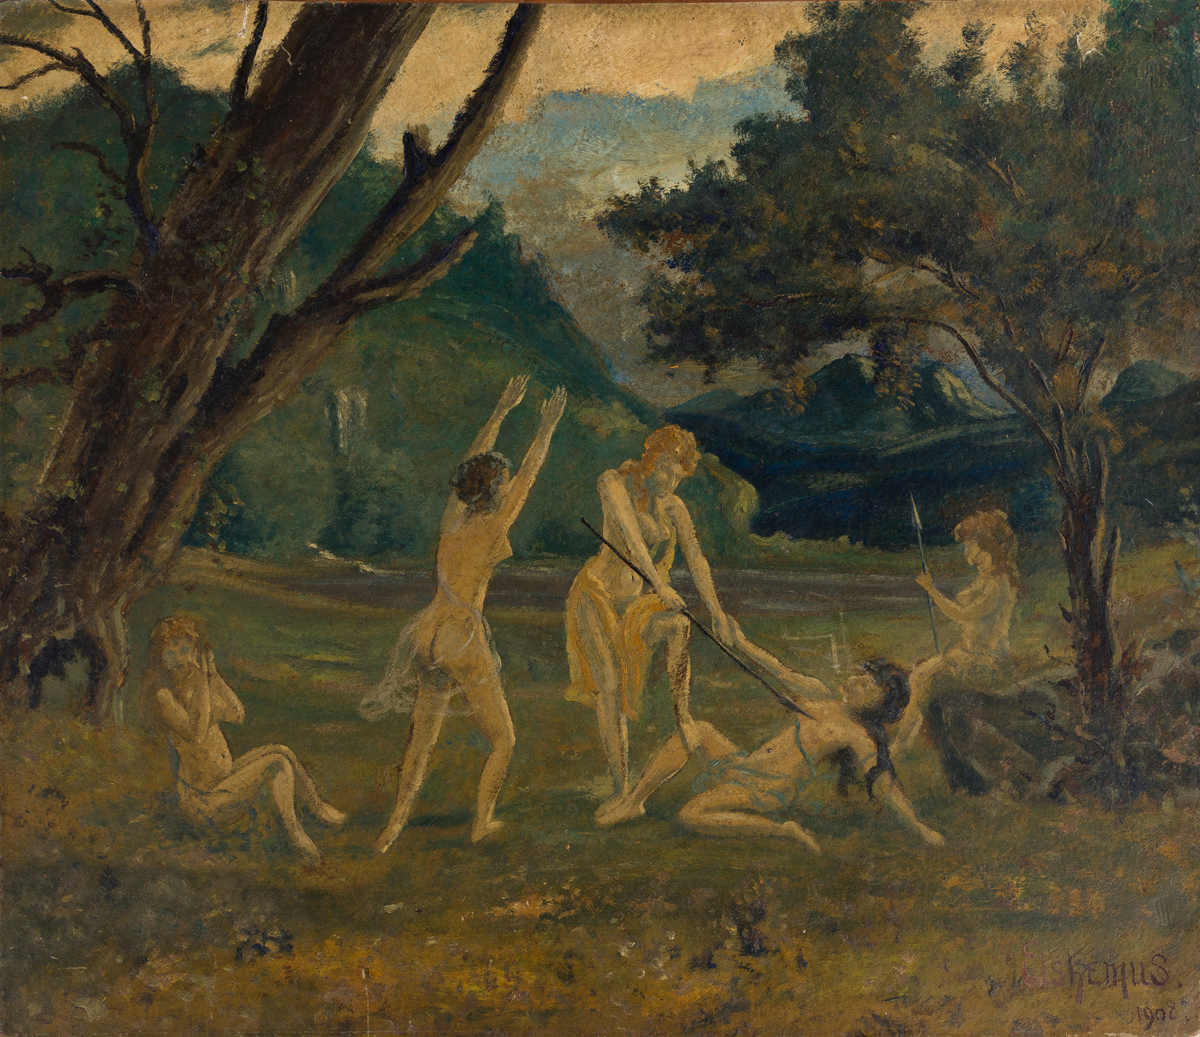 LOUIS EILSHEMIUS Landscape with Playful Nymphs.